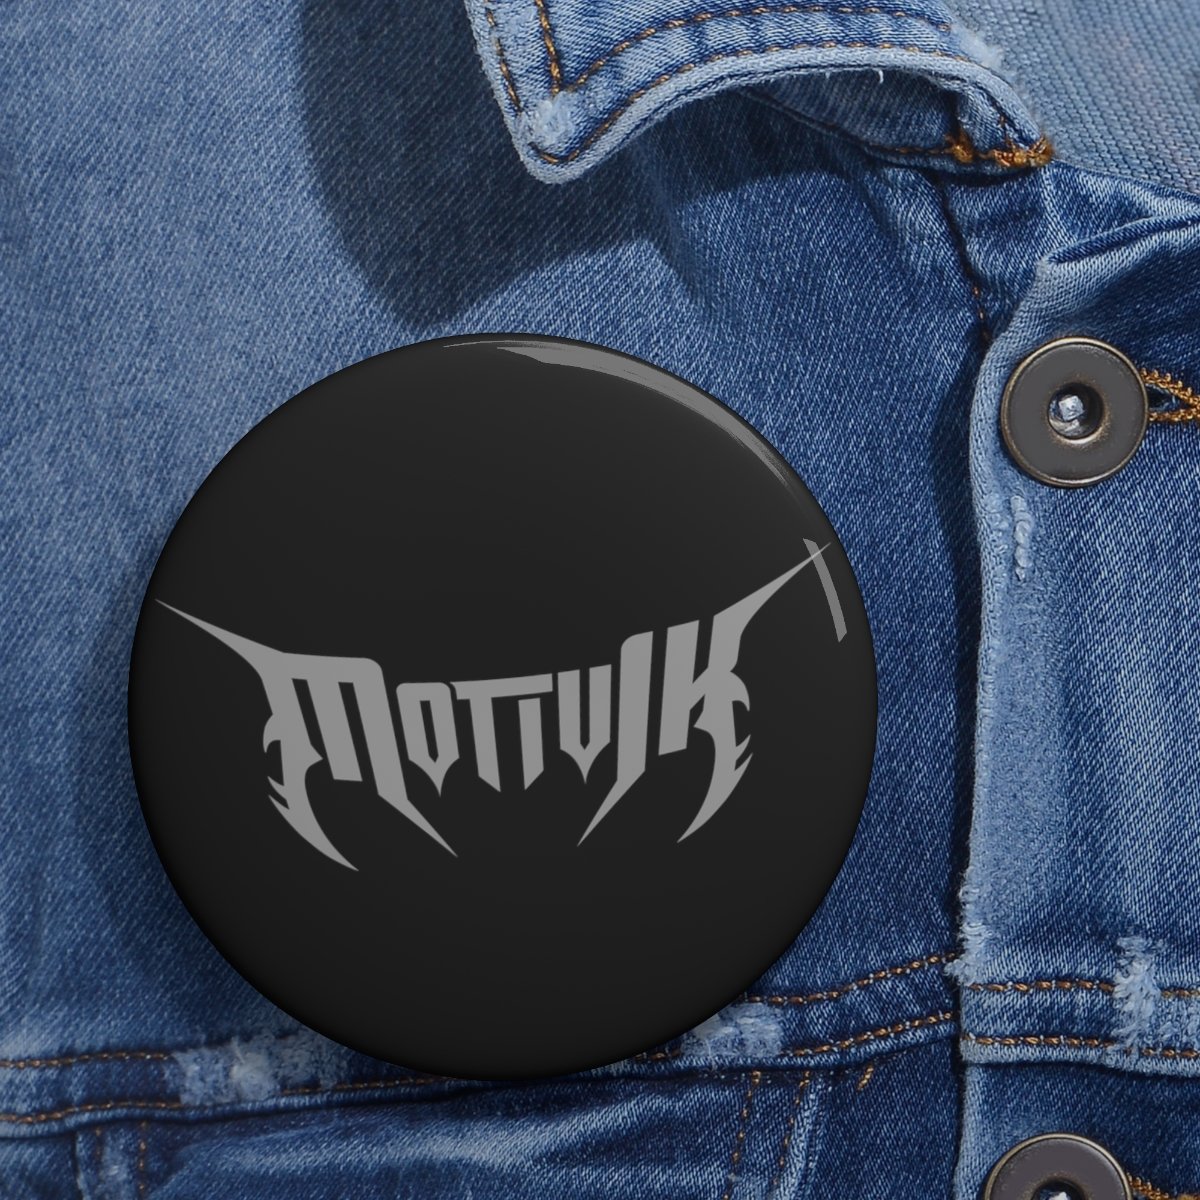 Motivik Grey Logo Pin Buttons